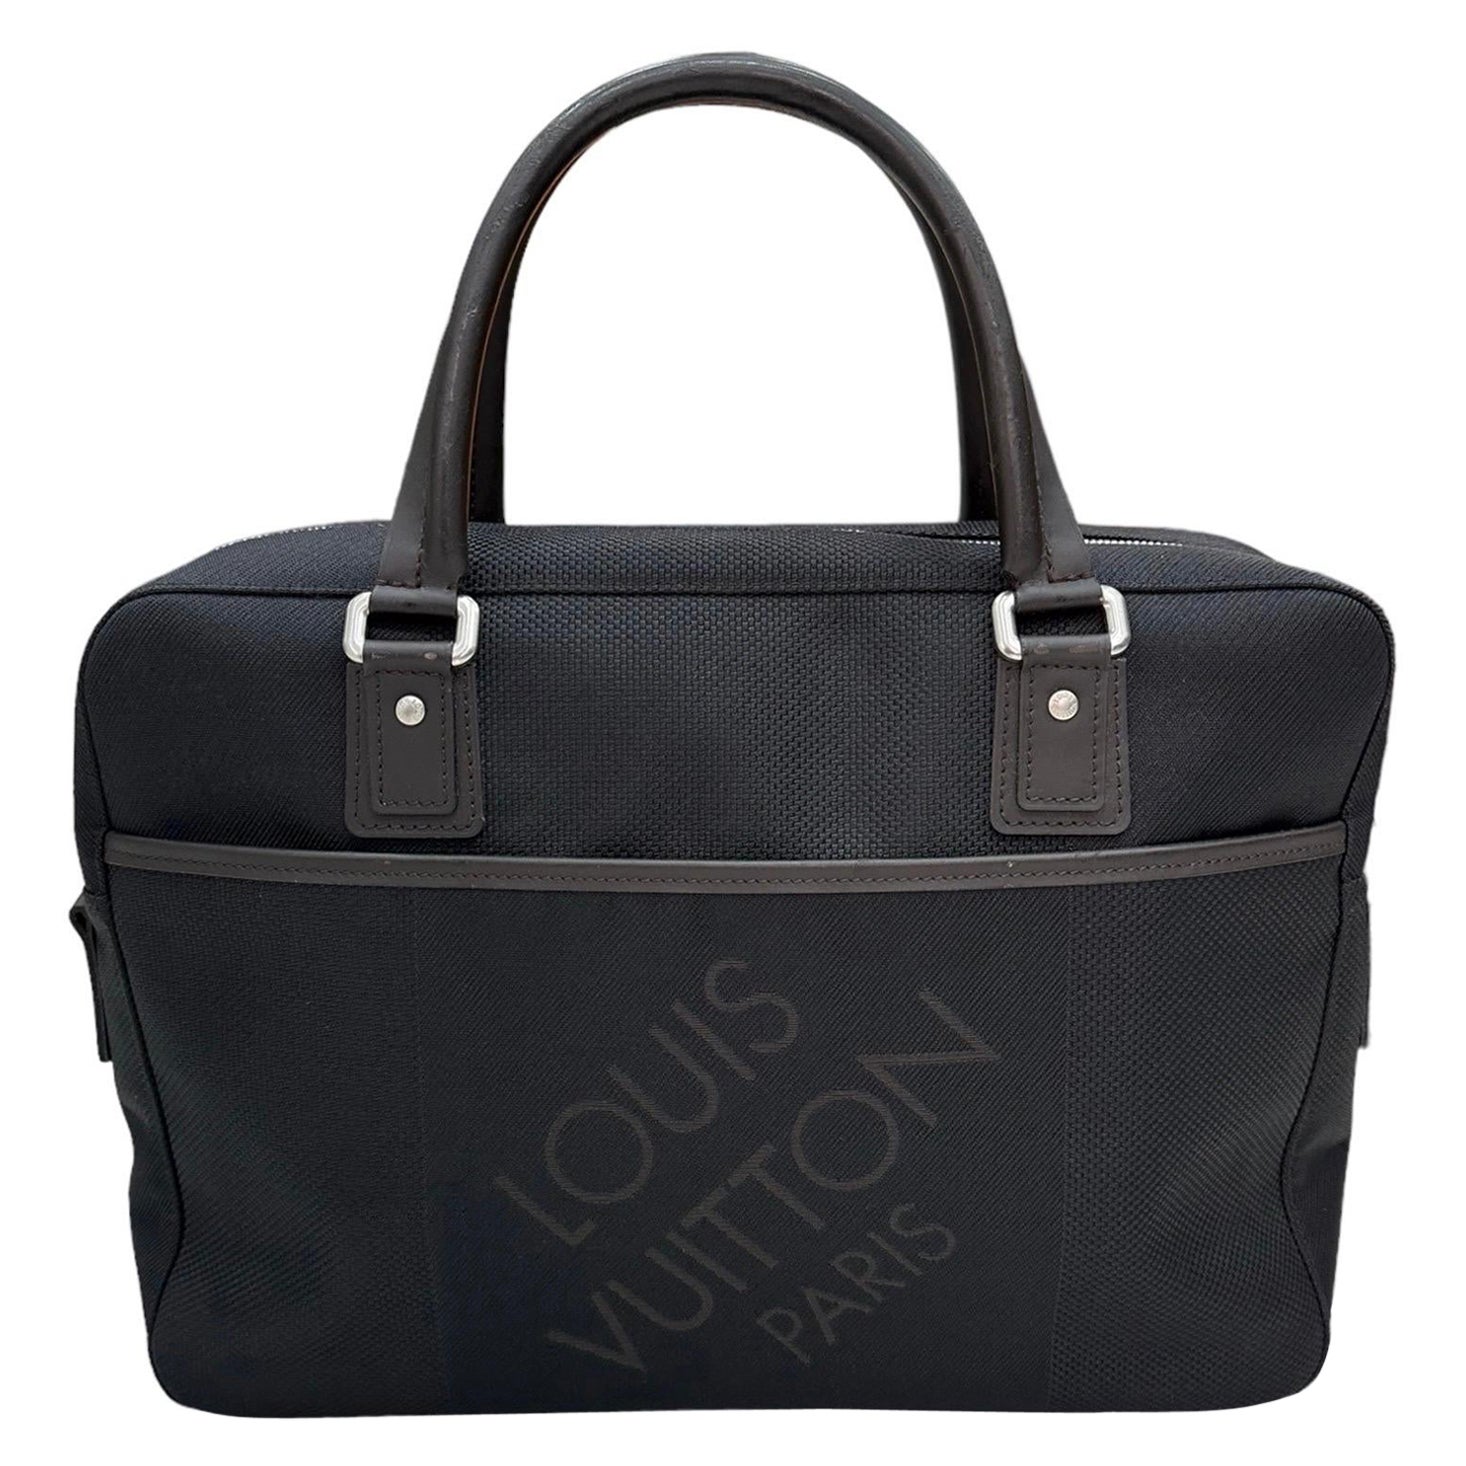  Louis Vuitton Yack GM Black Canva Top Handle Bag